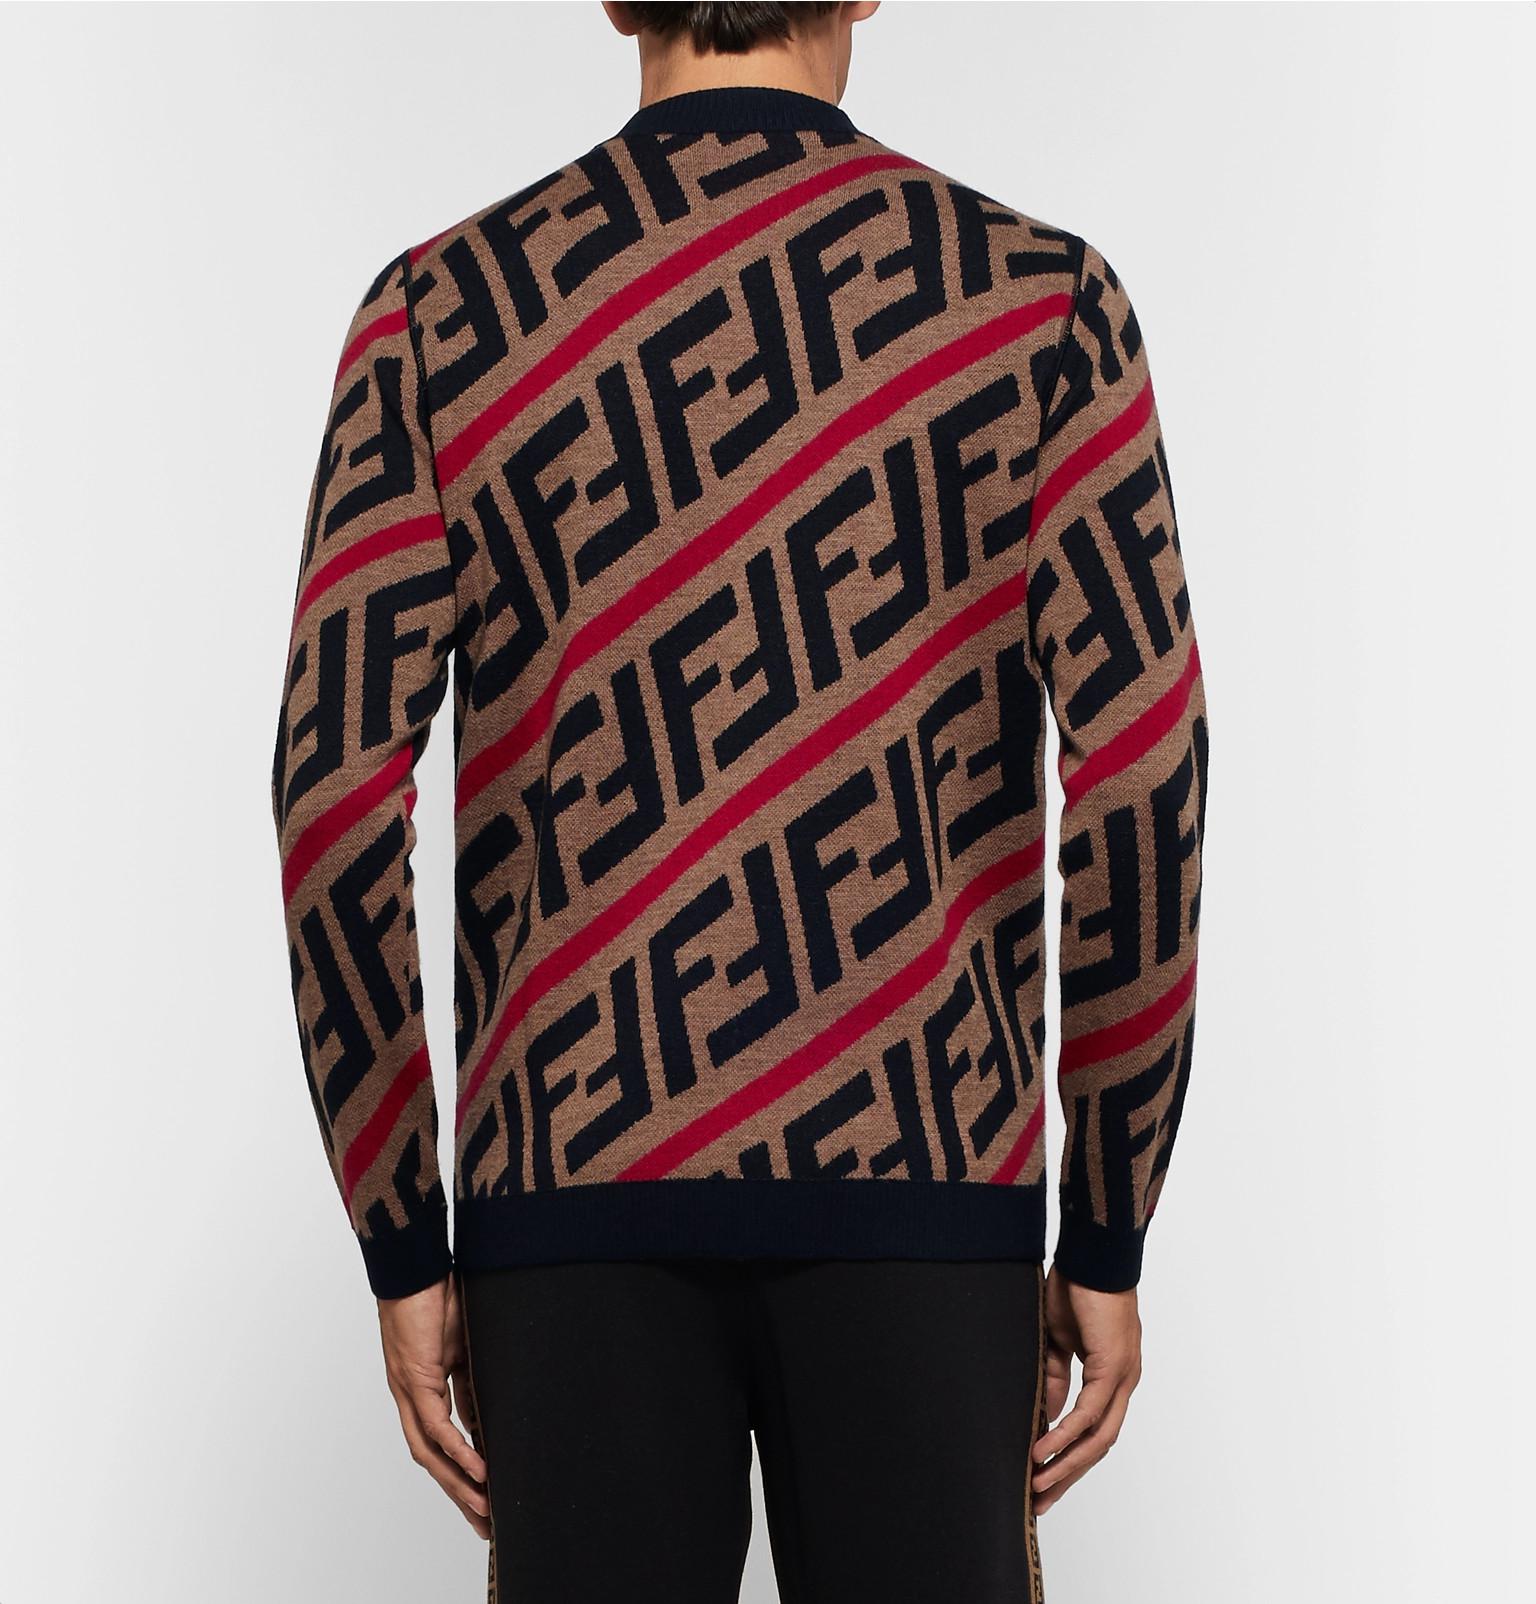 Fendi Logo-jacquard Wool Rollneck Sweater in Brown for Men - Lyst